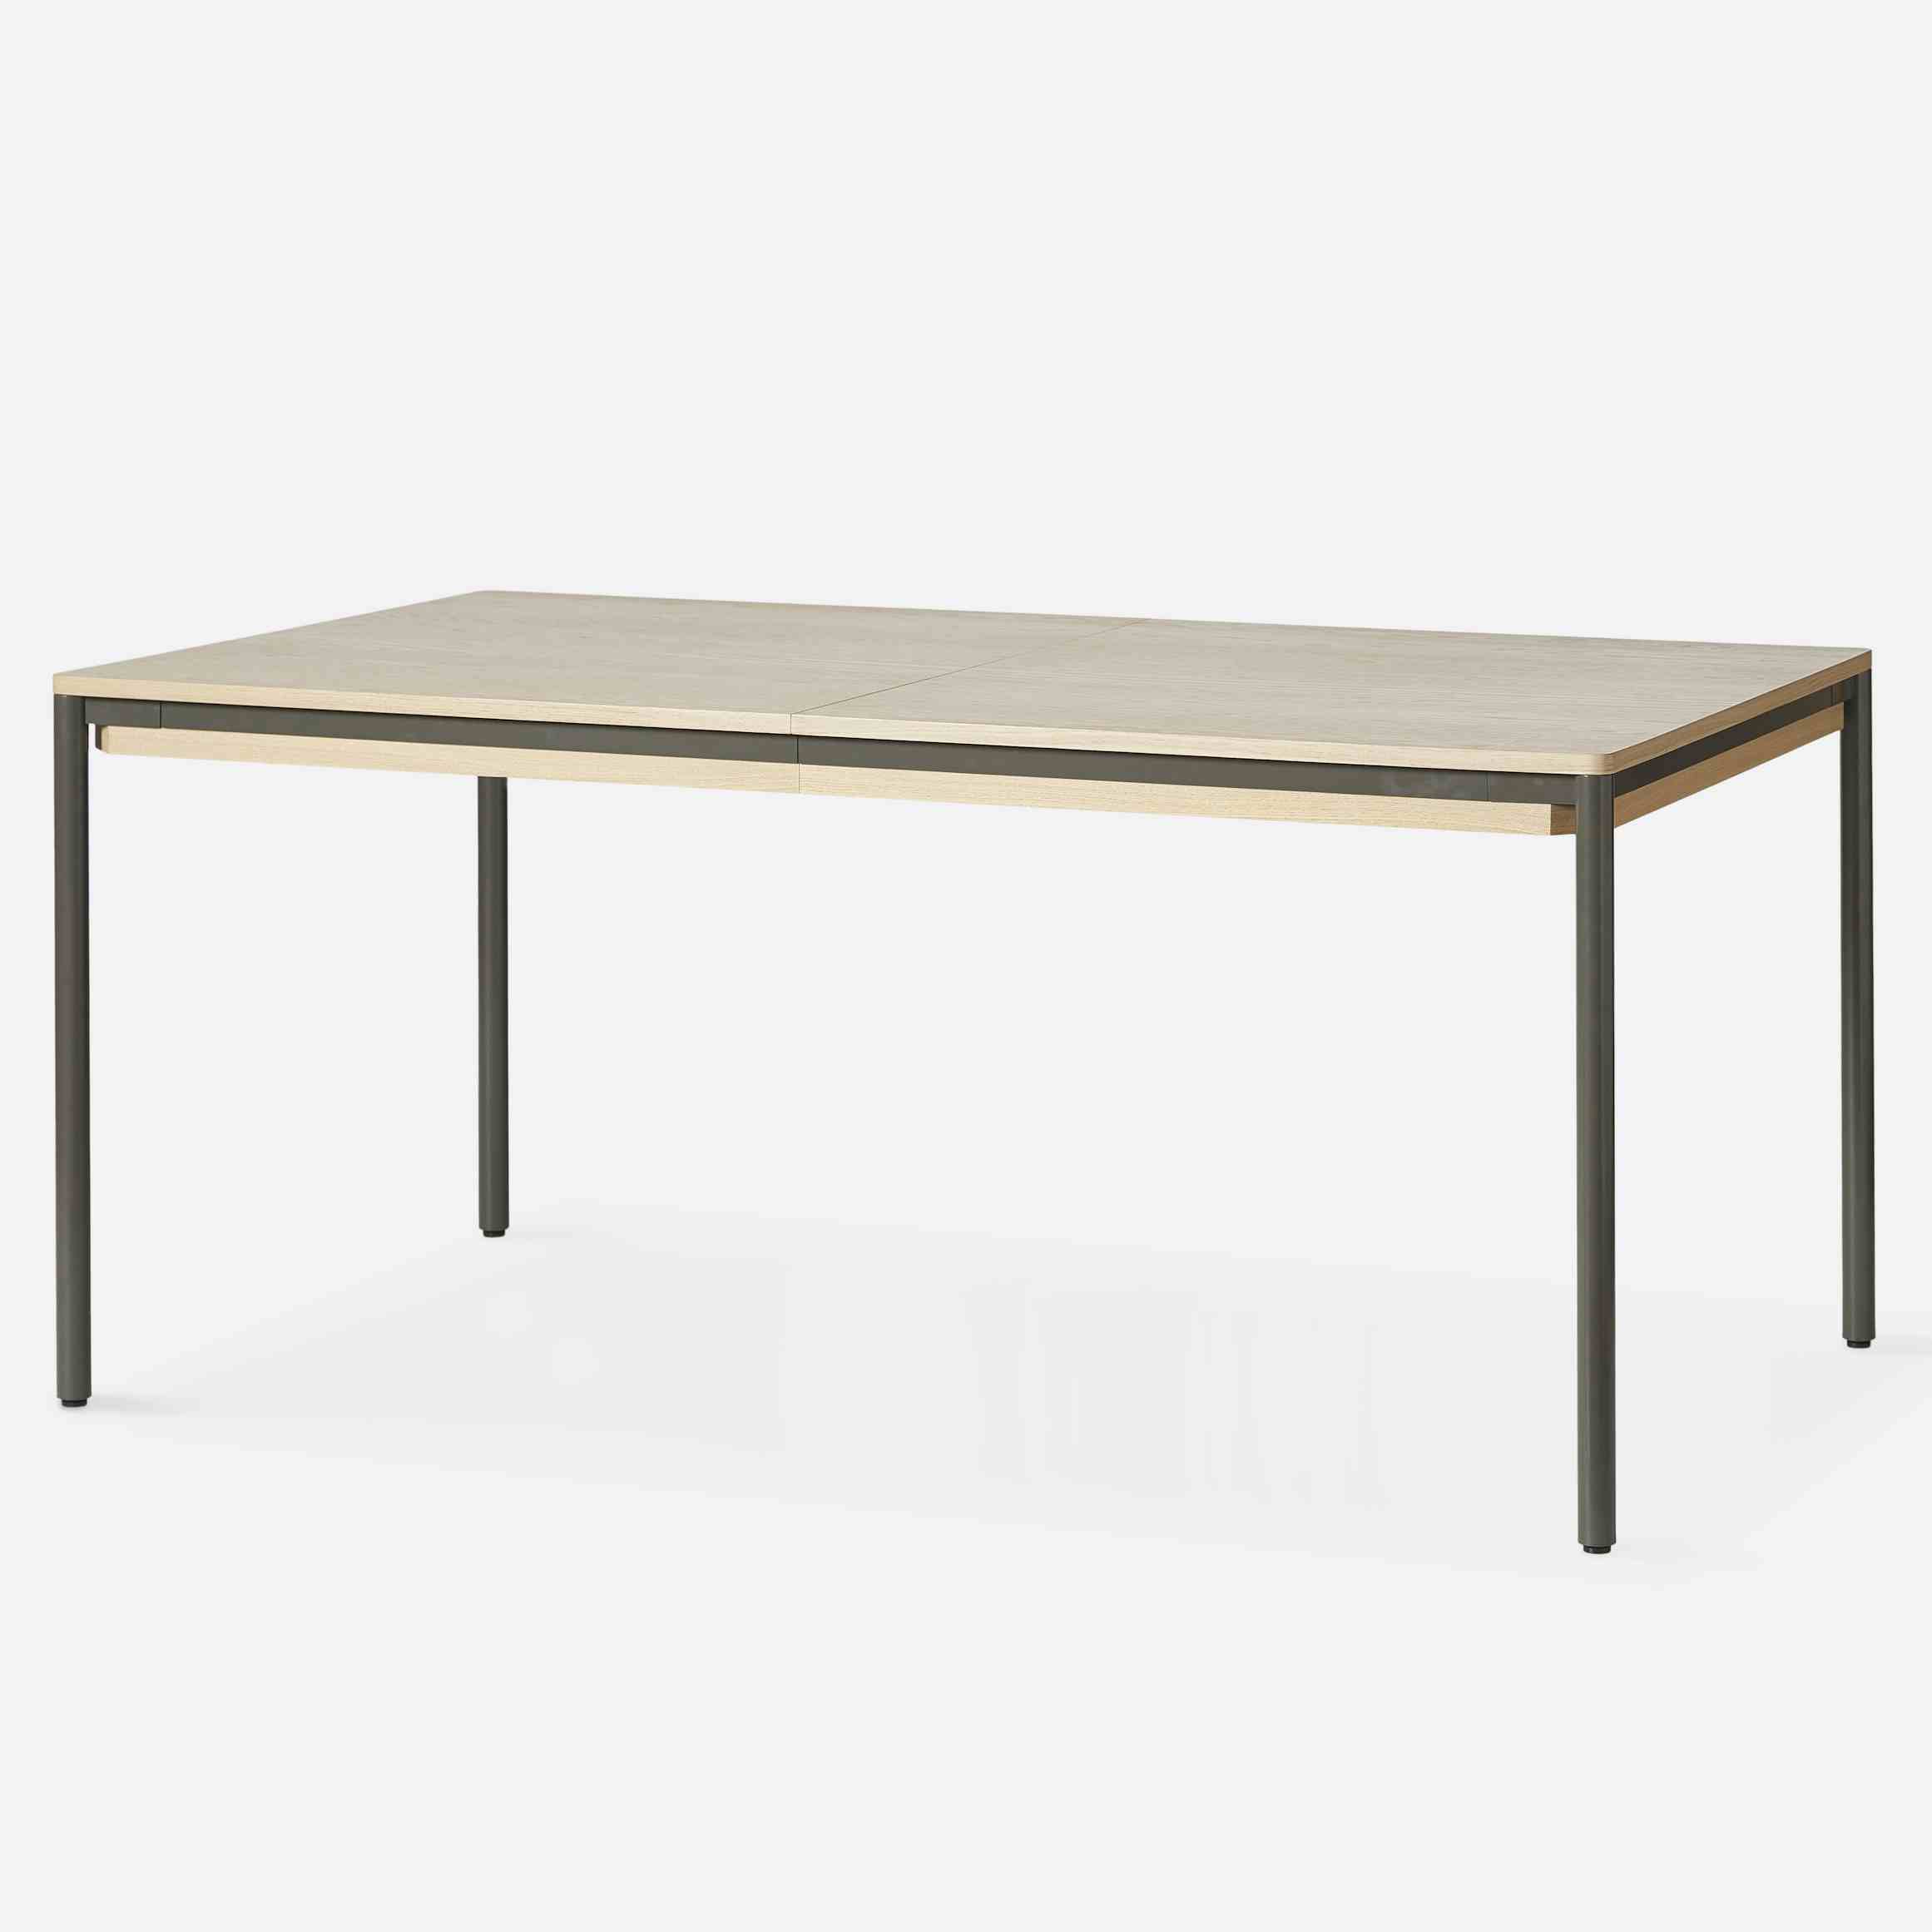 Woud furniture piezas extendable dining table thumbnail haute living